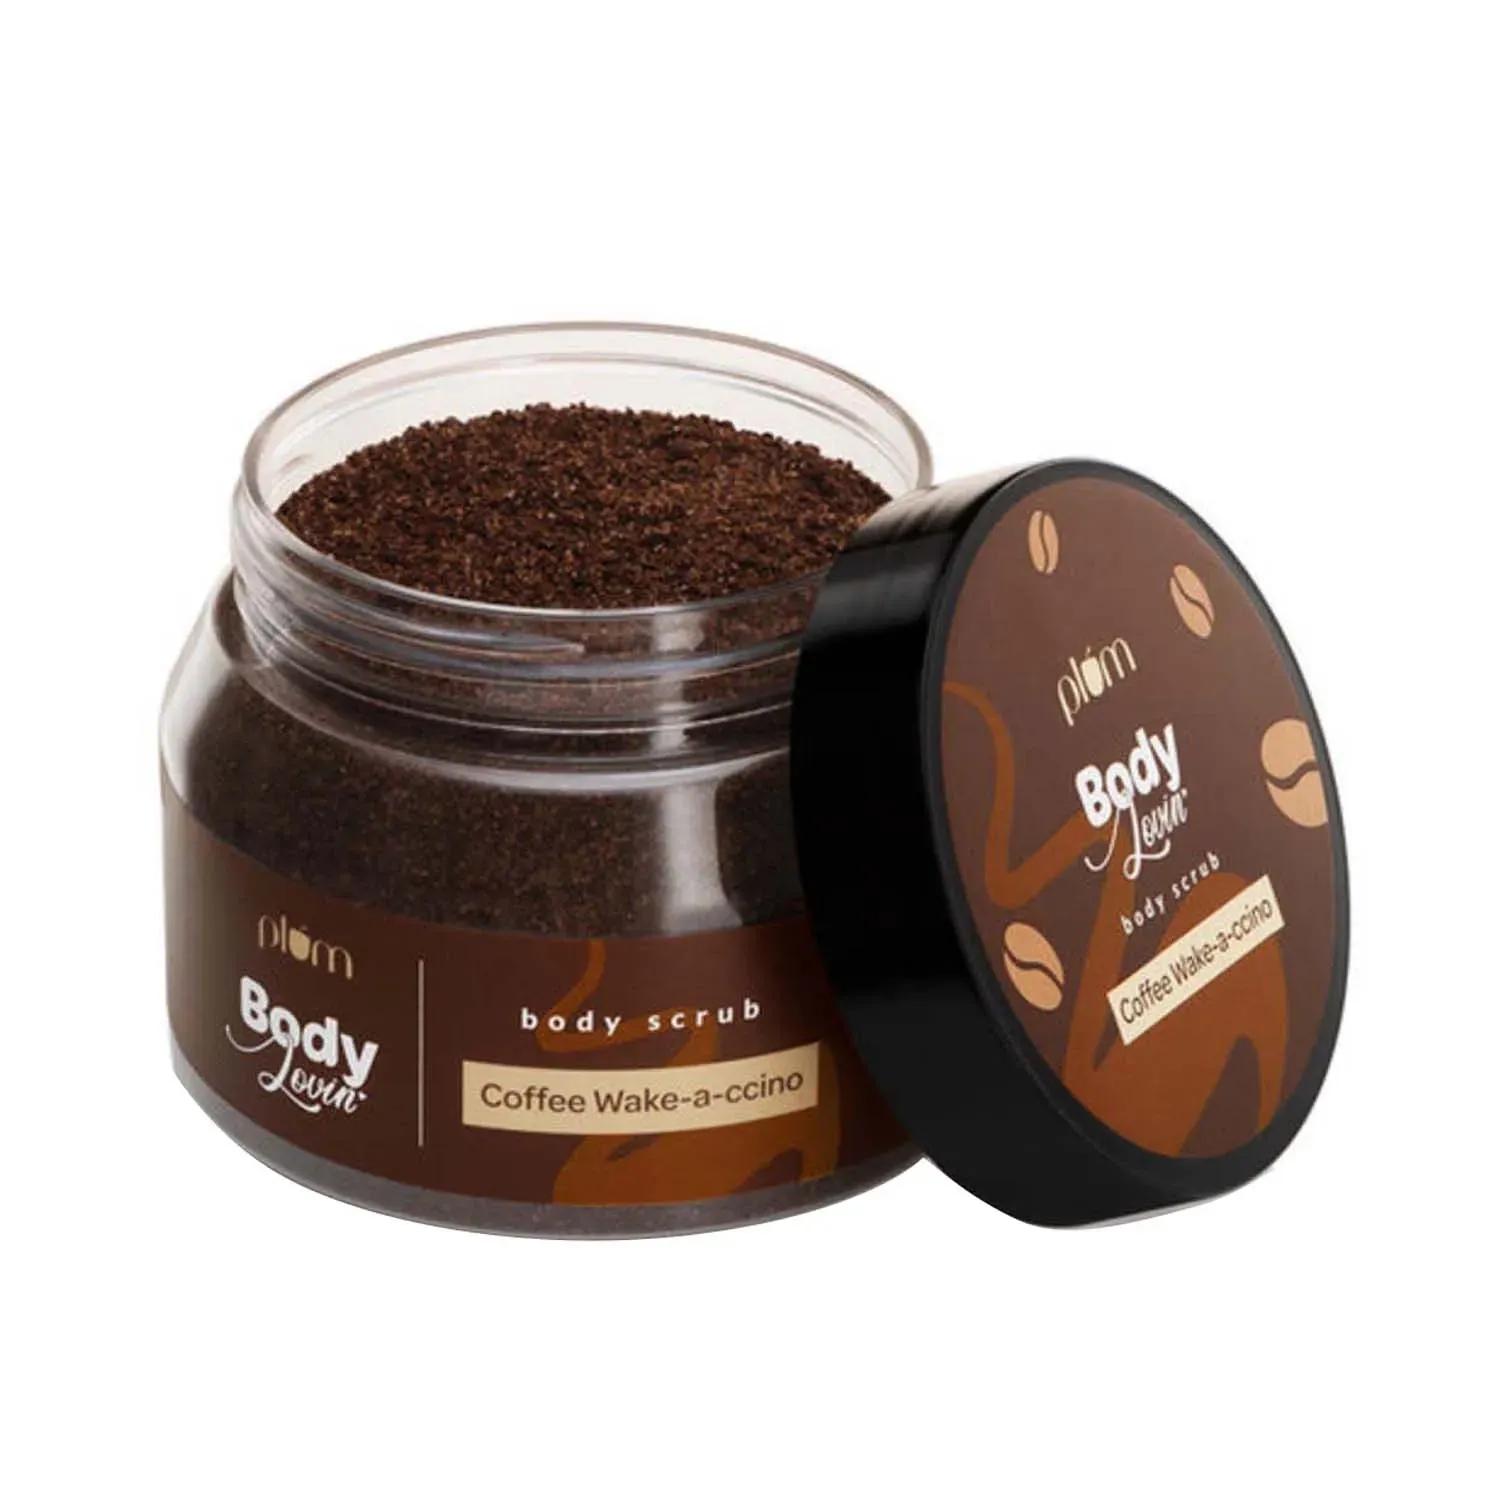 Plum Bodylovin' Coffee Wake-A-Ccino Body Scrub - (100g)